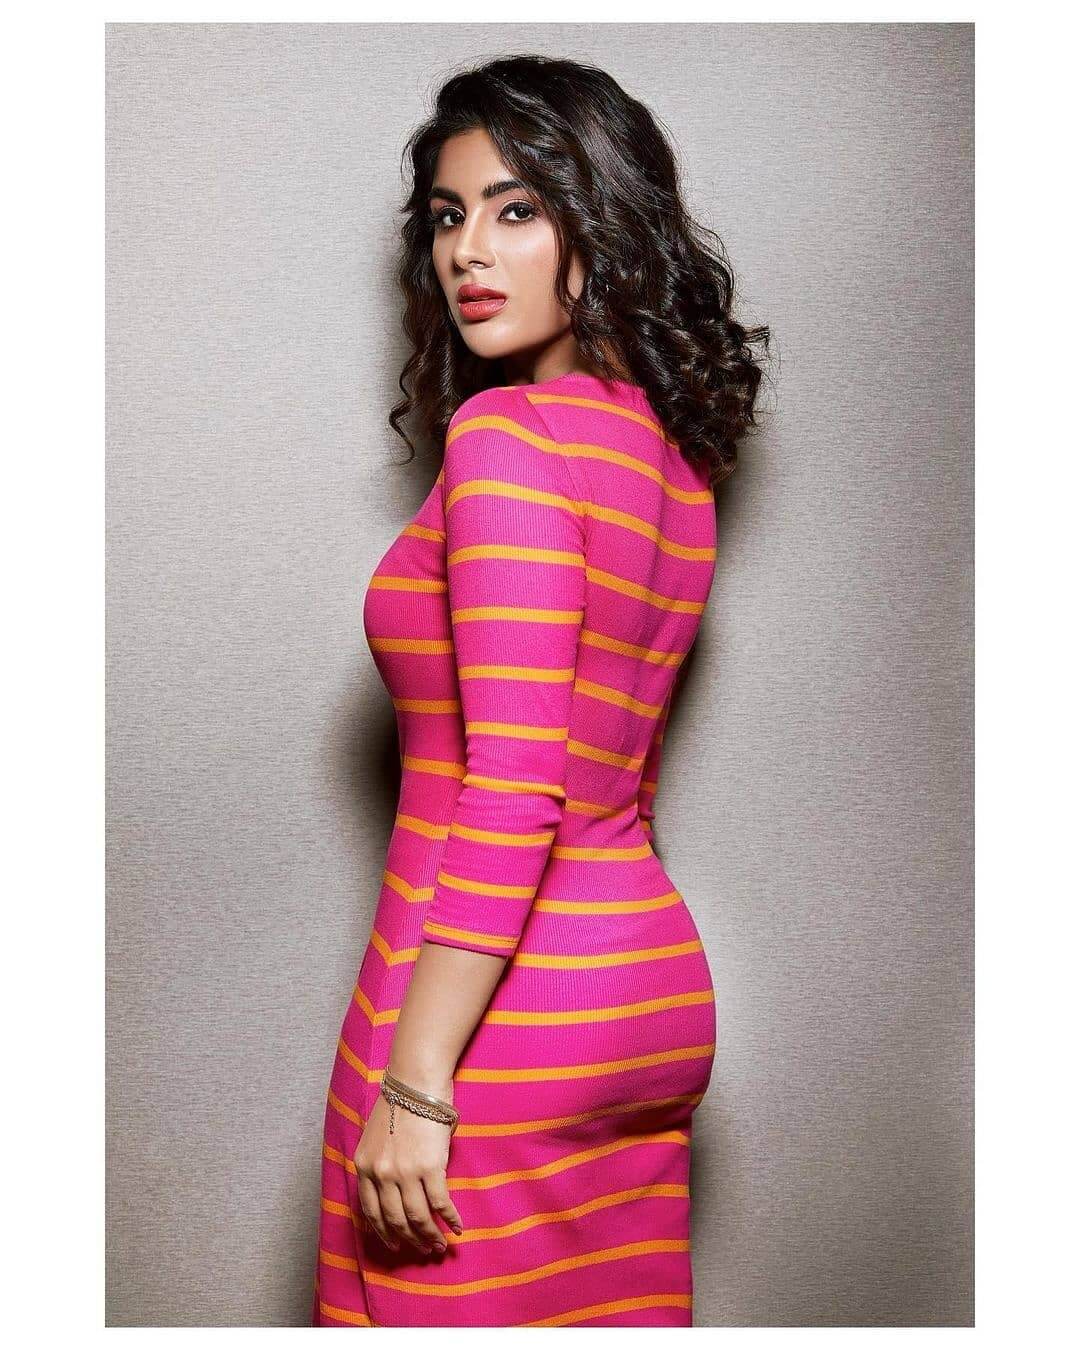 Actress Samyuktha Menon in pink outfit